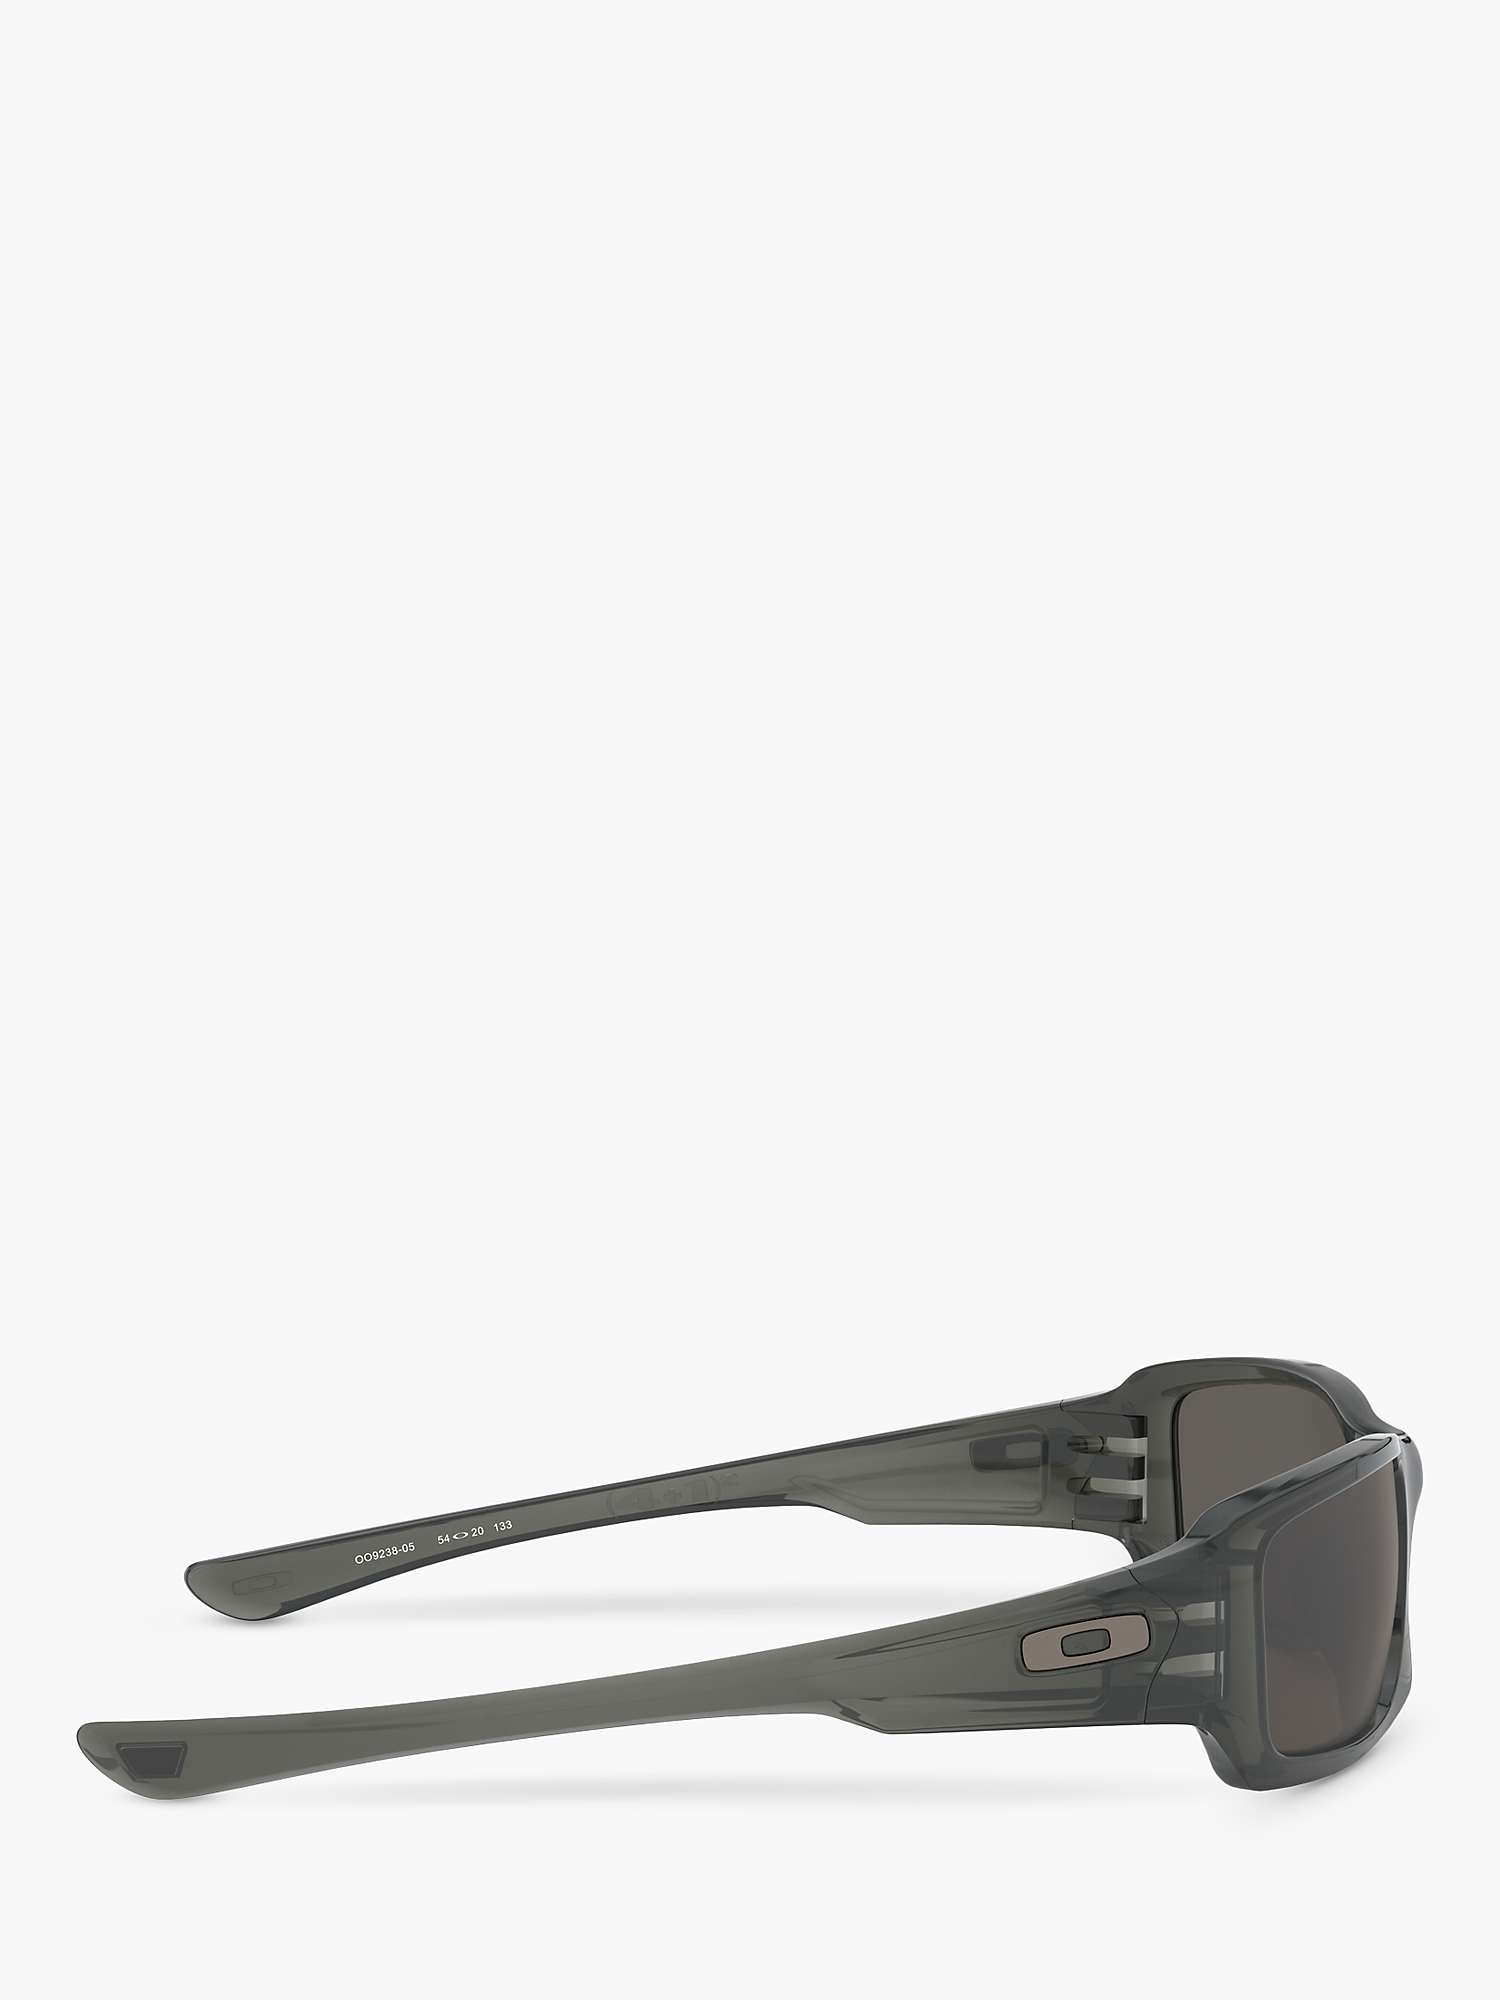 Buy Oakley OO9238 Women's Fives Squared Rectangular Sunglasses, Grey Smoke Online at johnlewis.com